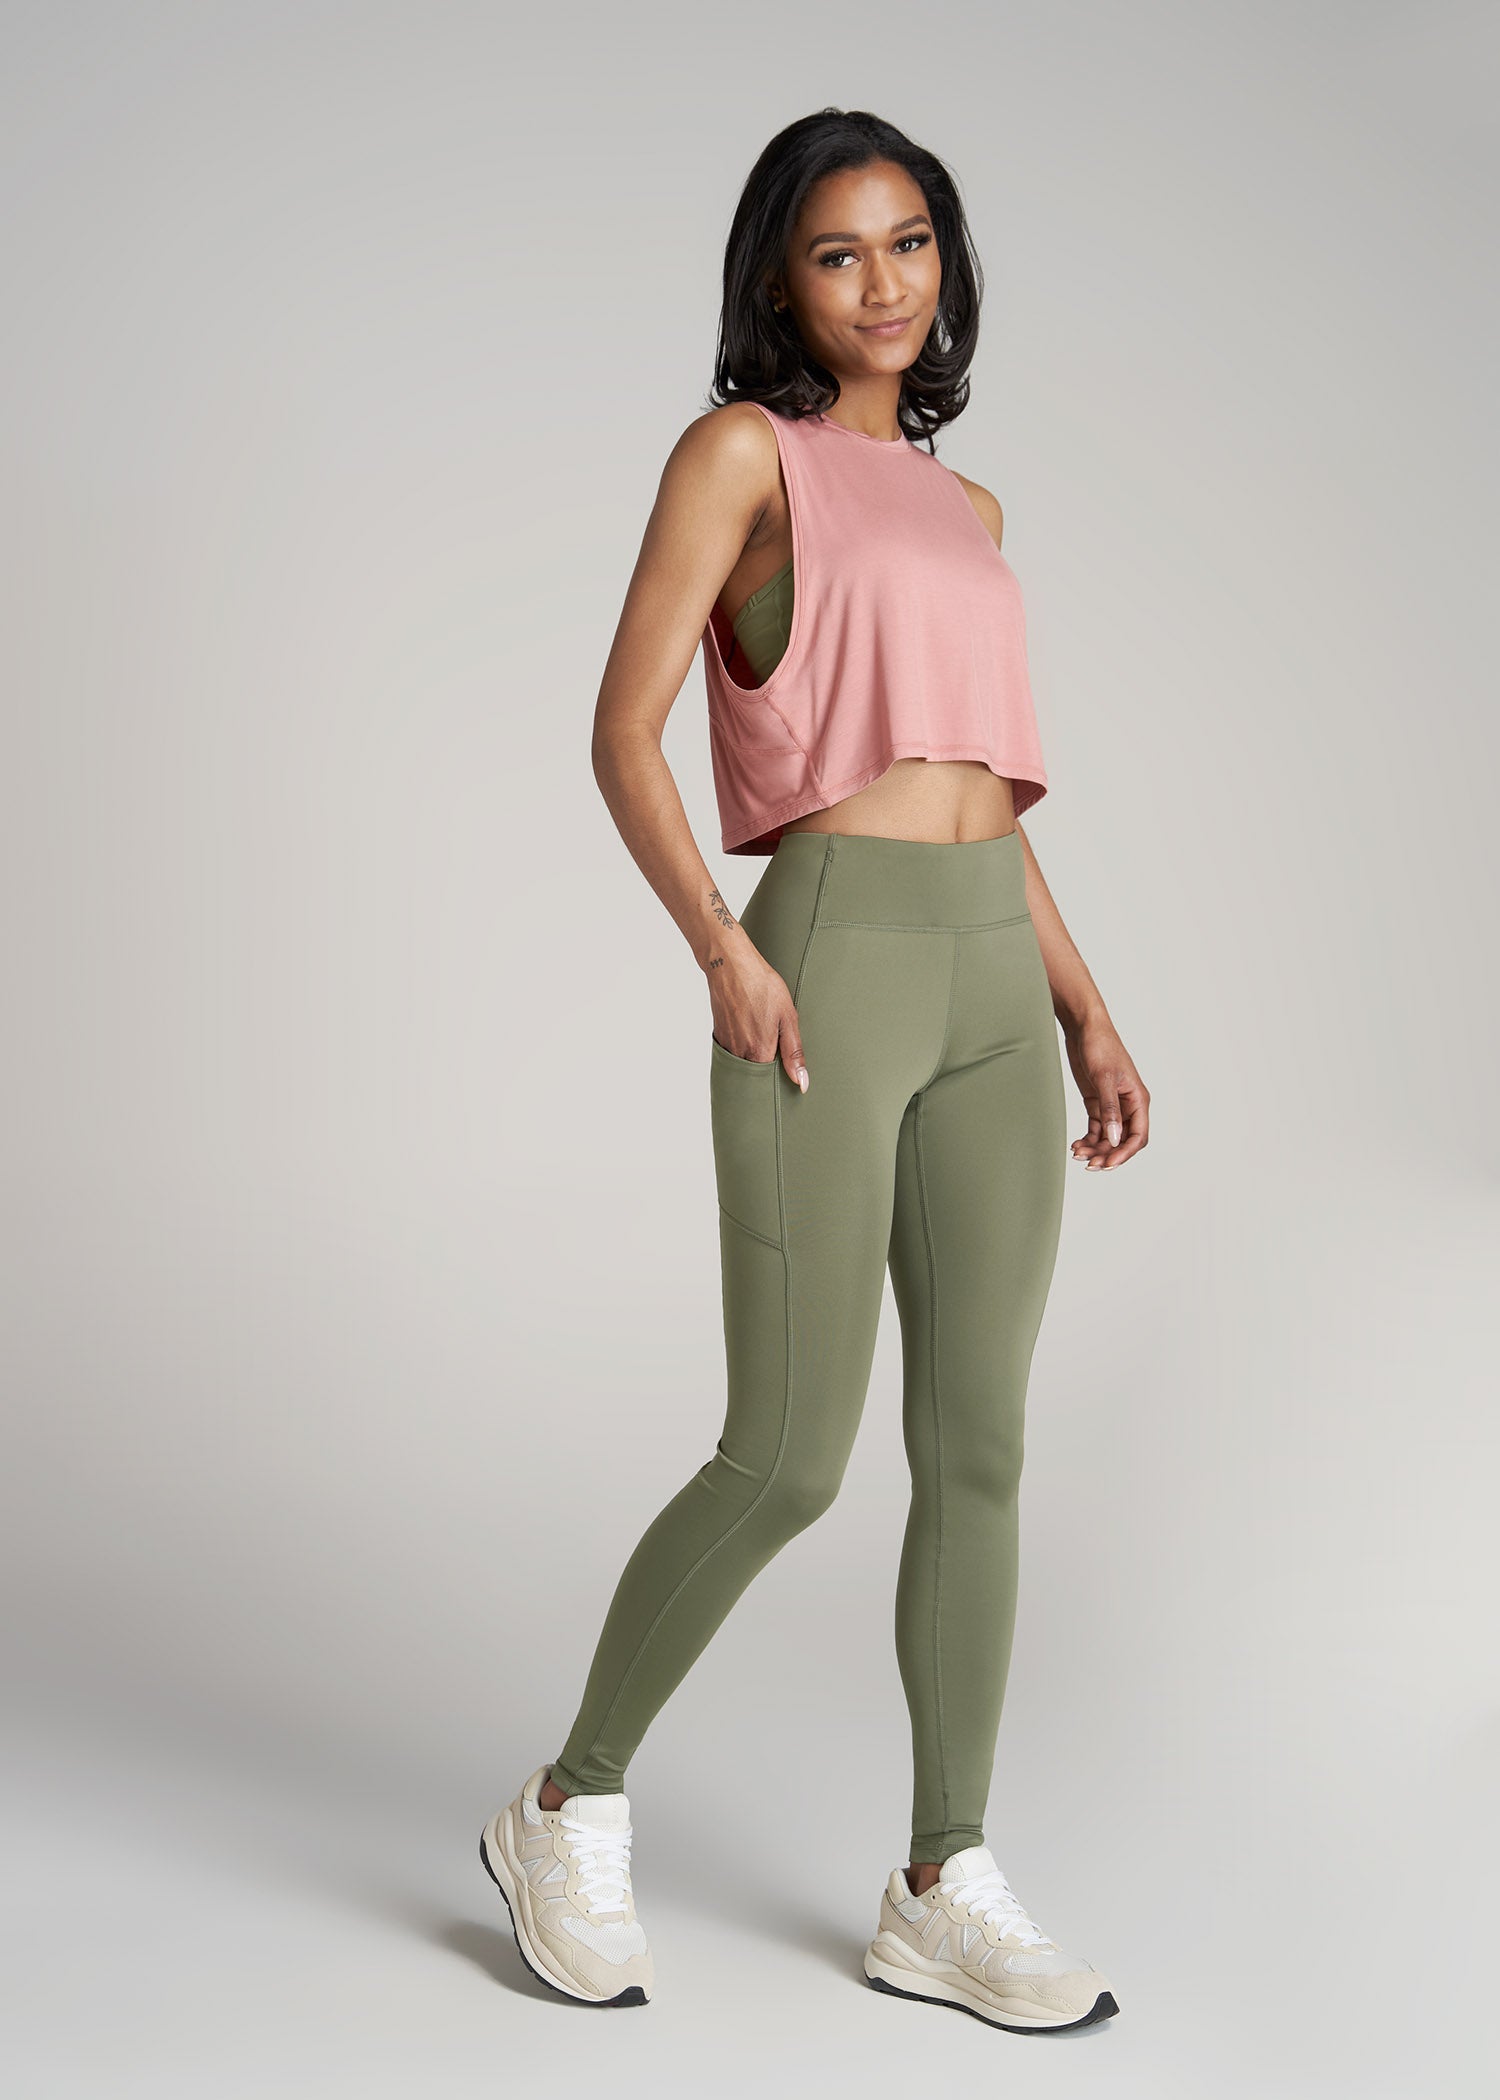 Super model high-waisted extra long leggings @Breathm-lake green